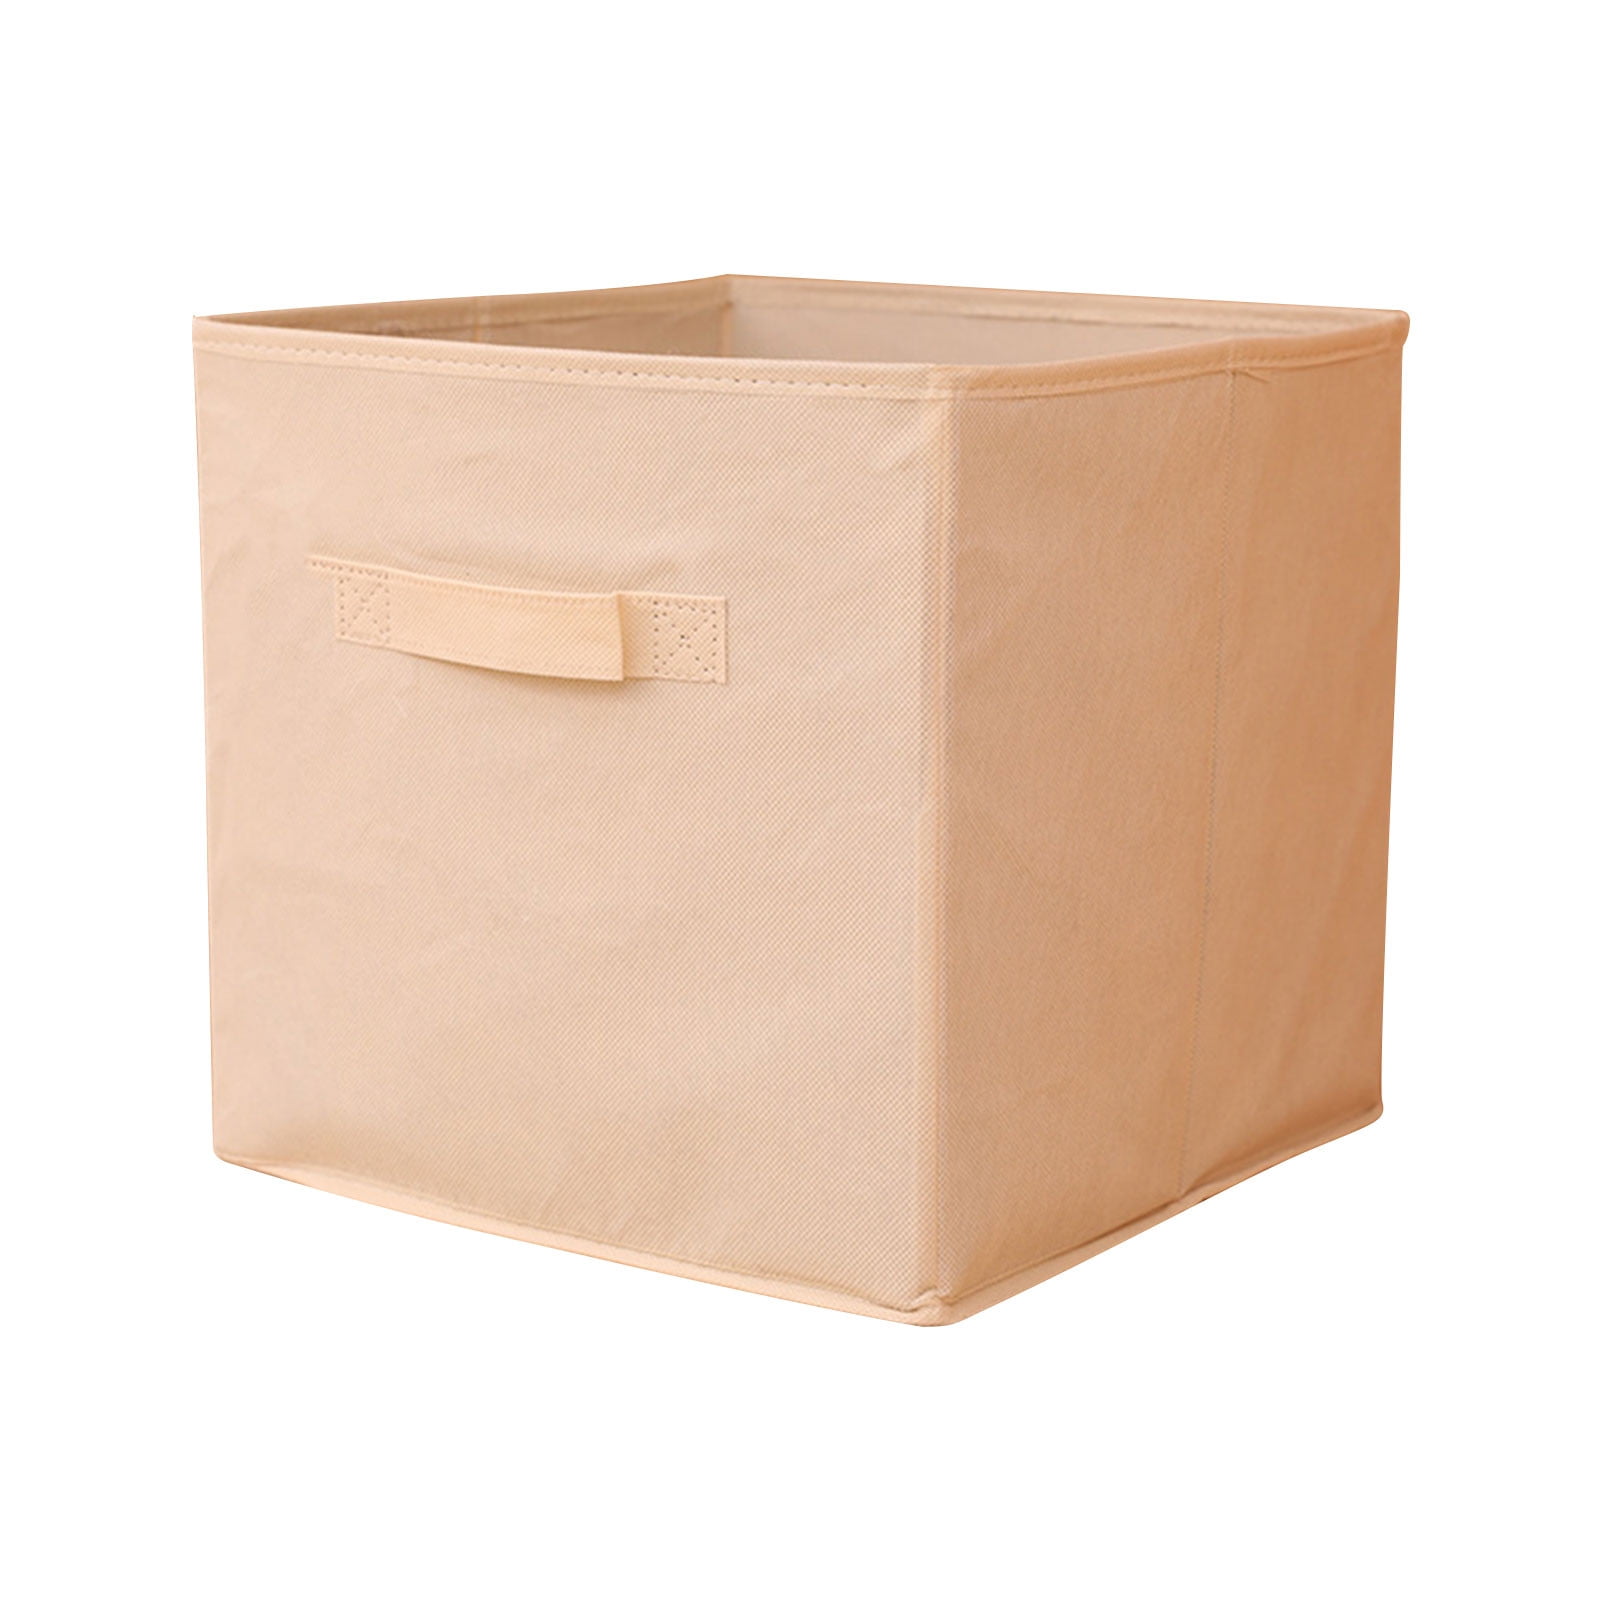 12x12 Fabric Storage Bins Household Portable Storage Basket With Handle  Drawstring Clothing Storage Box Large Capacity Dustproof Oxford Closet  Organizer 230413 From Gou09, $10.99